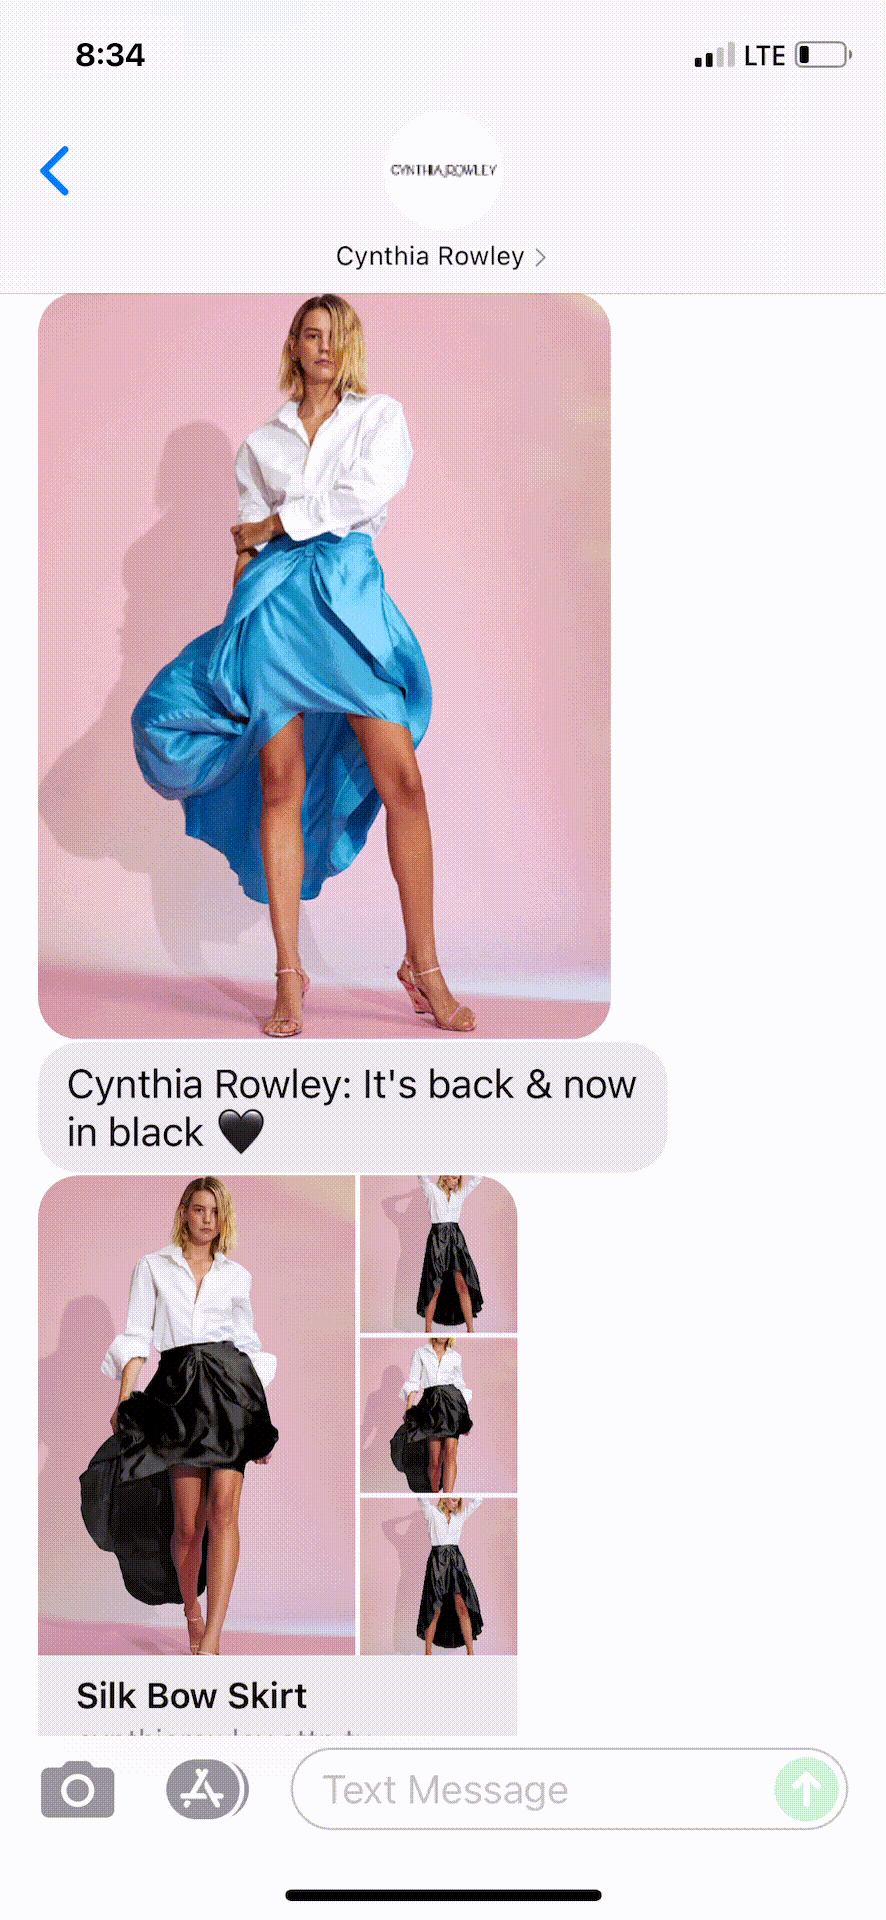 Cynthia-Rowley-Text-Message-Marketing-Example-09.30.2021